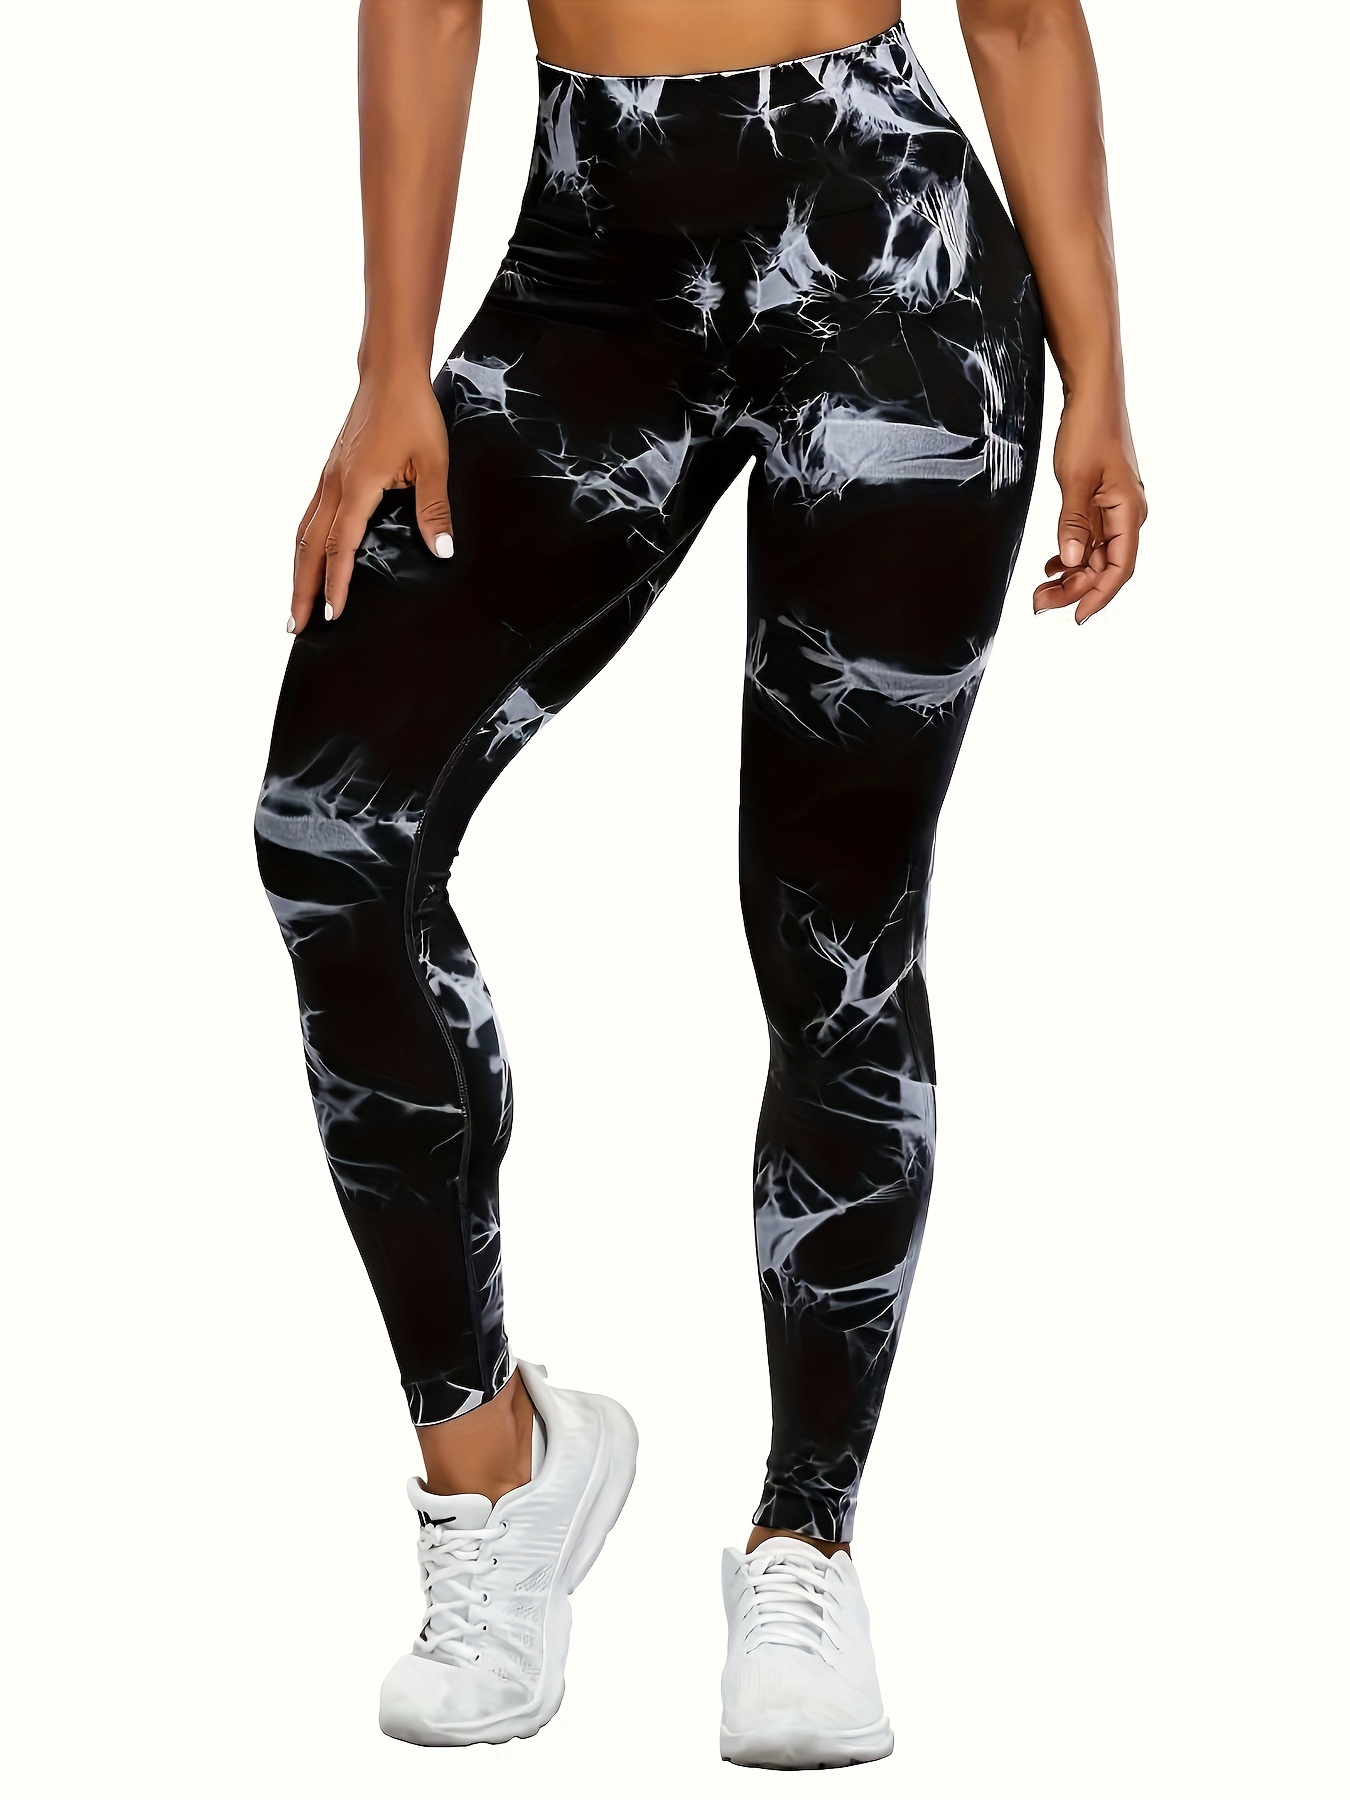 JDEFEG Label Yoga Pants Women's Workout Pants Elastic High Waist Tie-Dye  Capris Leggings High Waist Yoga Pants For Women Cotton Polyester Black M